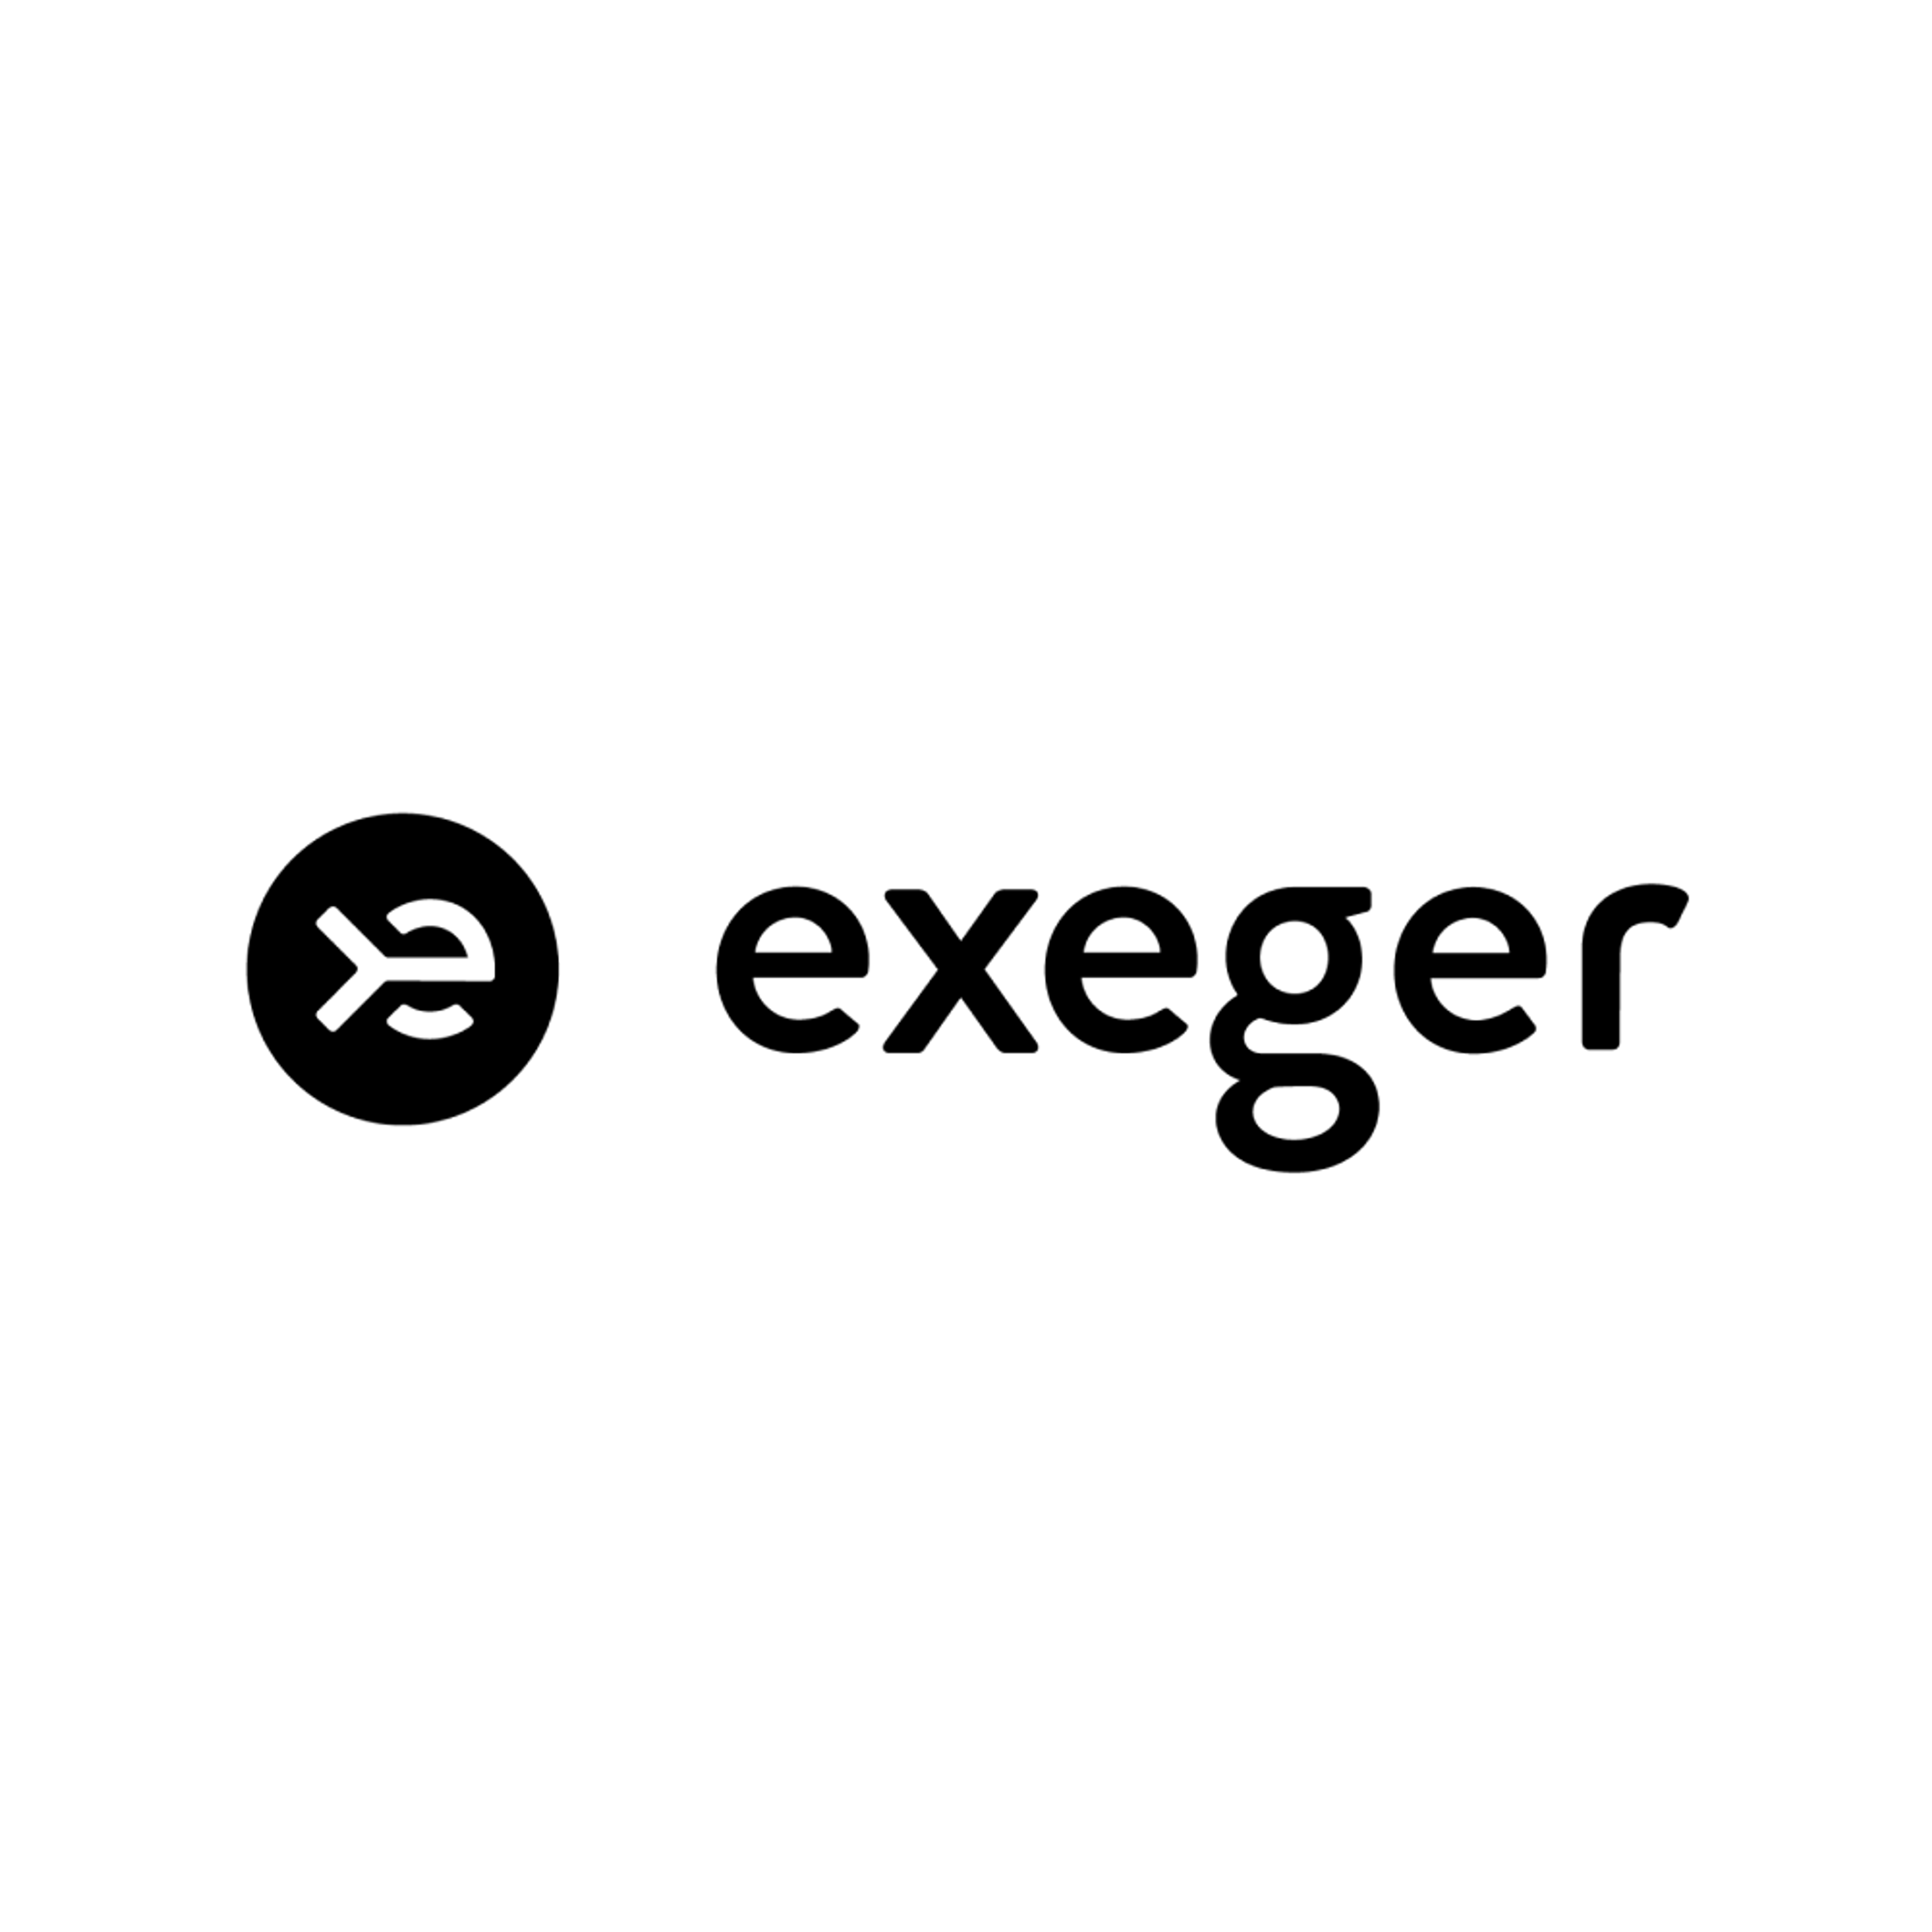 Exeger